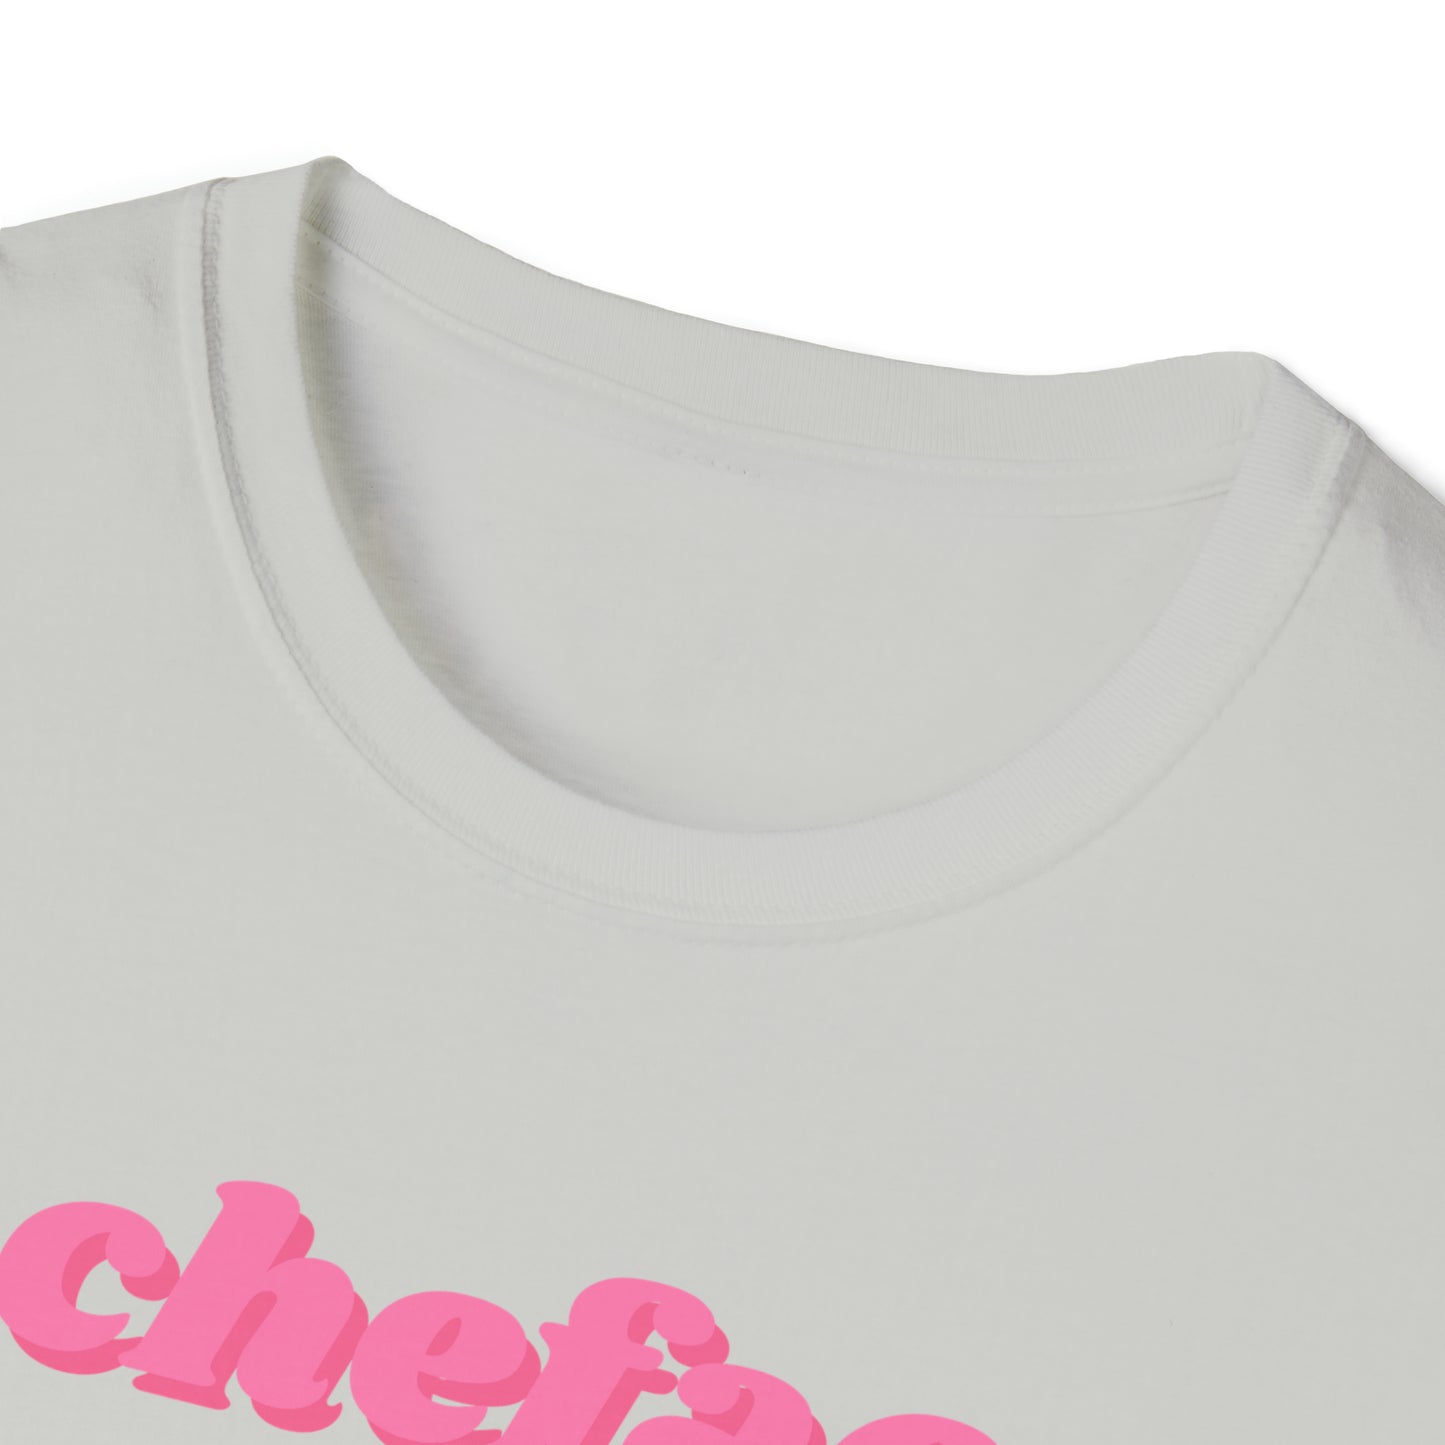 Chefao Sunflower III, Unisex Softstyle T-Shirt